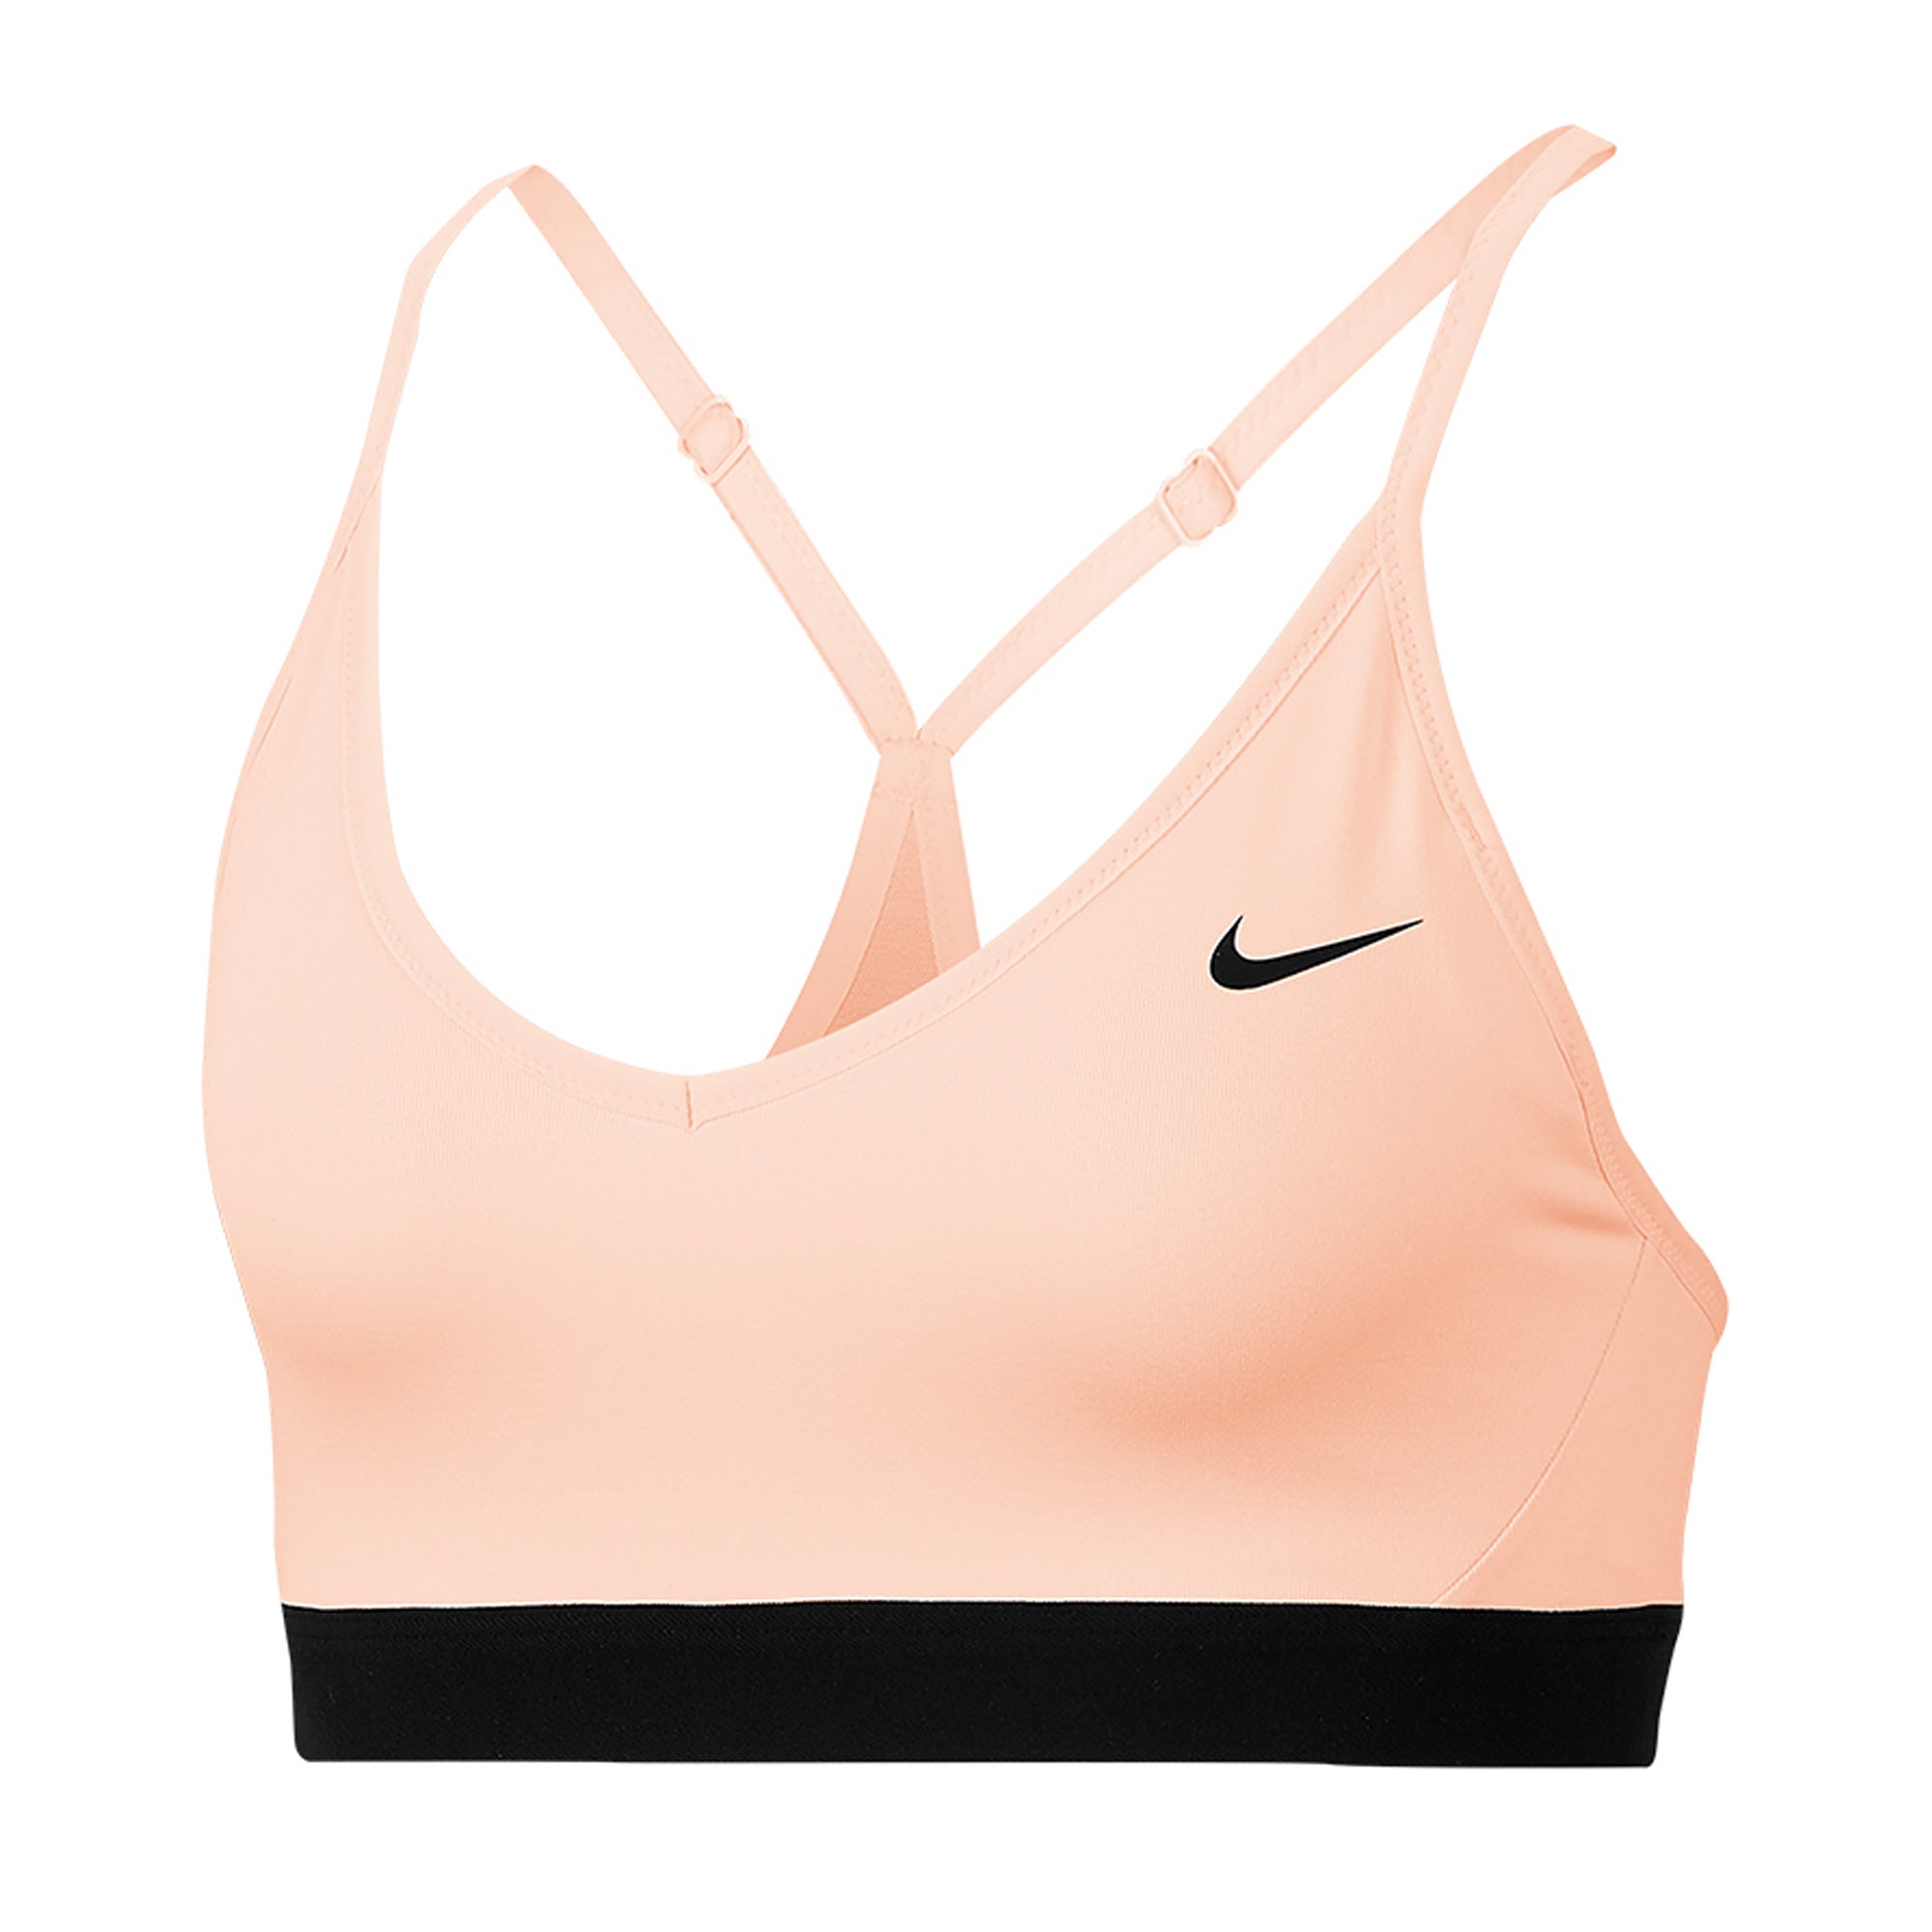 Nike Sports Bras, White, Black, Pink & More